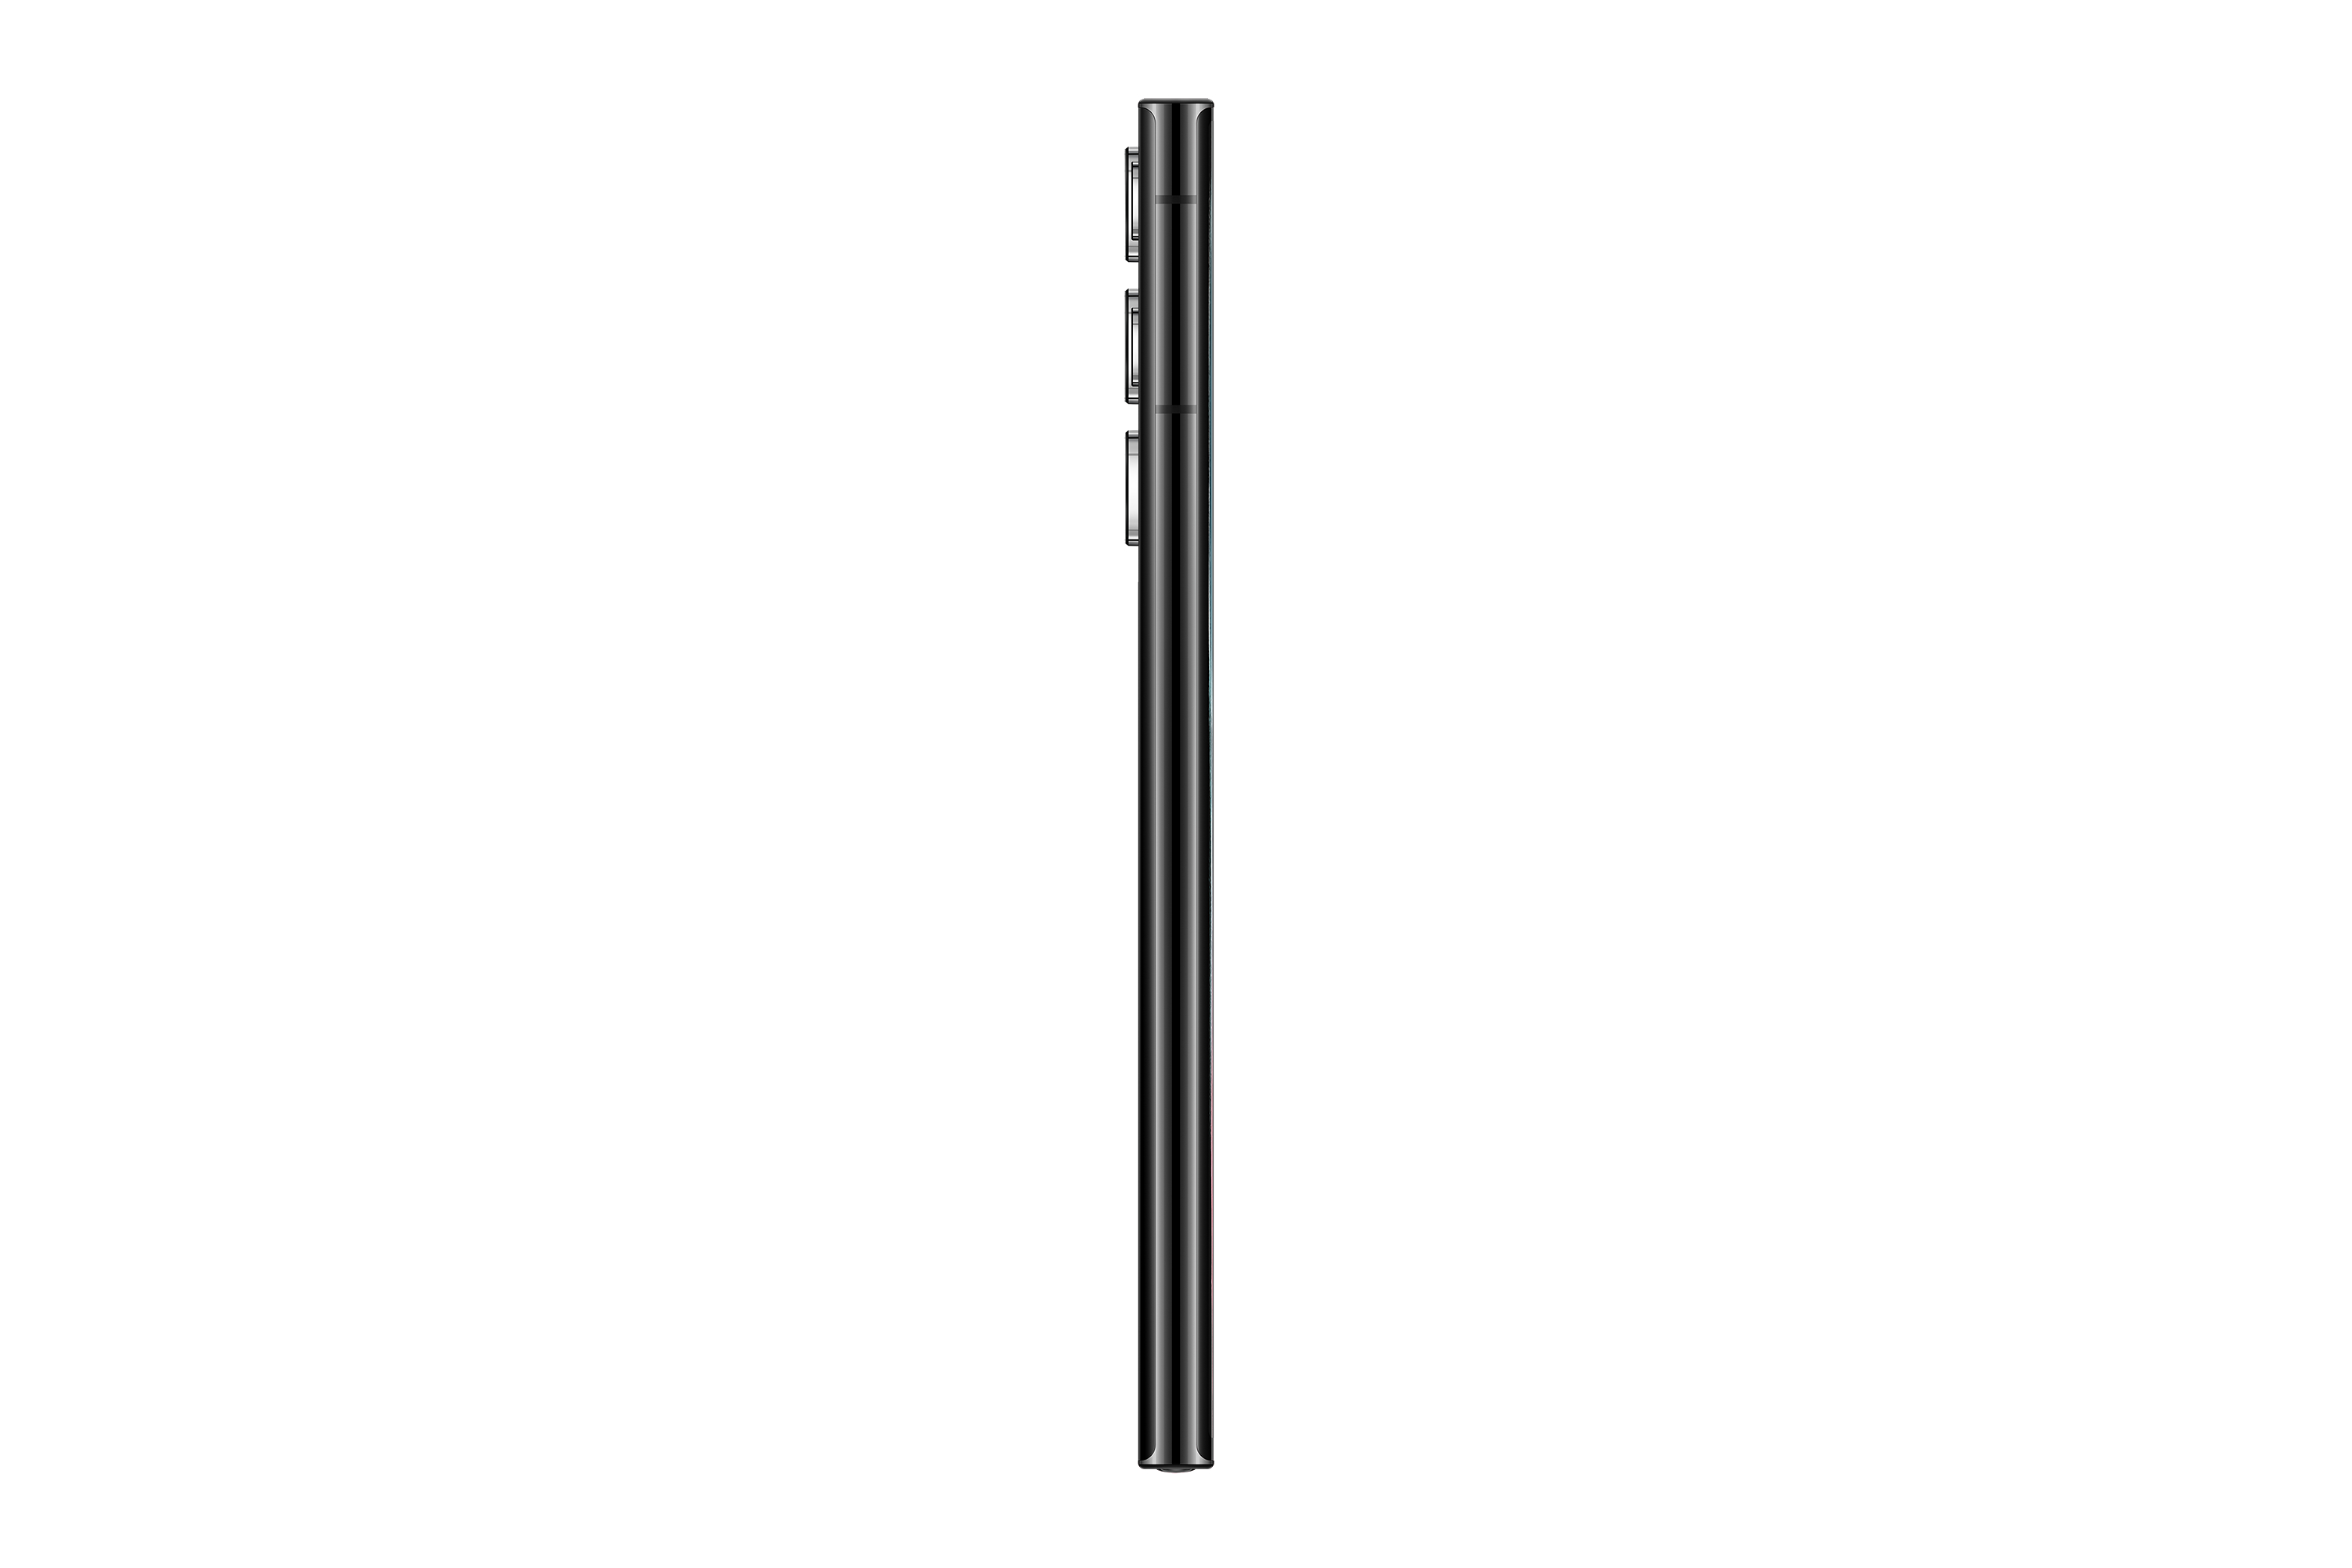 SAMSUNG Galaxy SIM 128 Phantom GB S22 Black 5G Ultra Dual